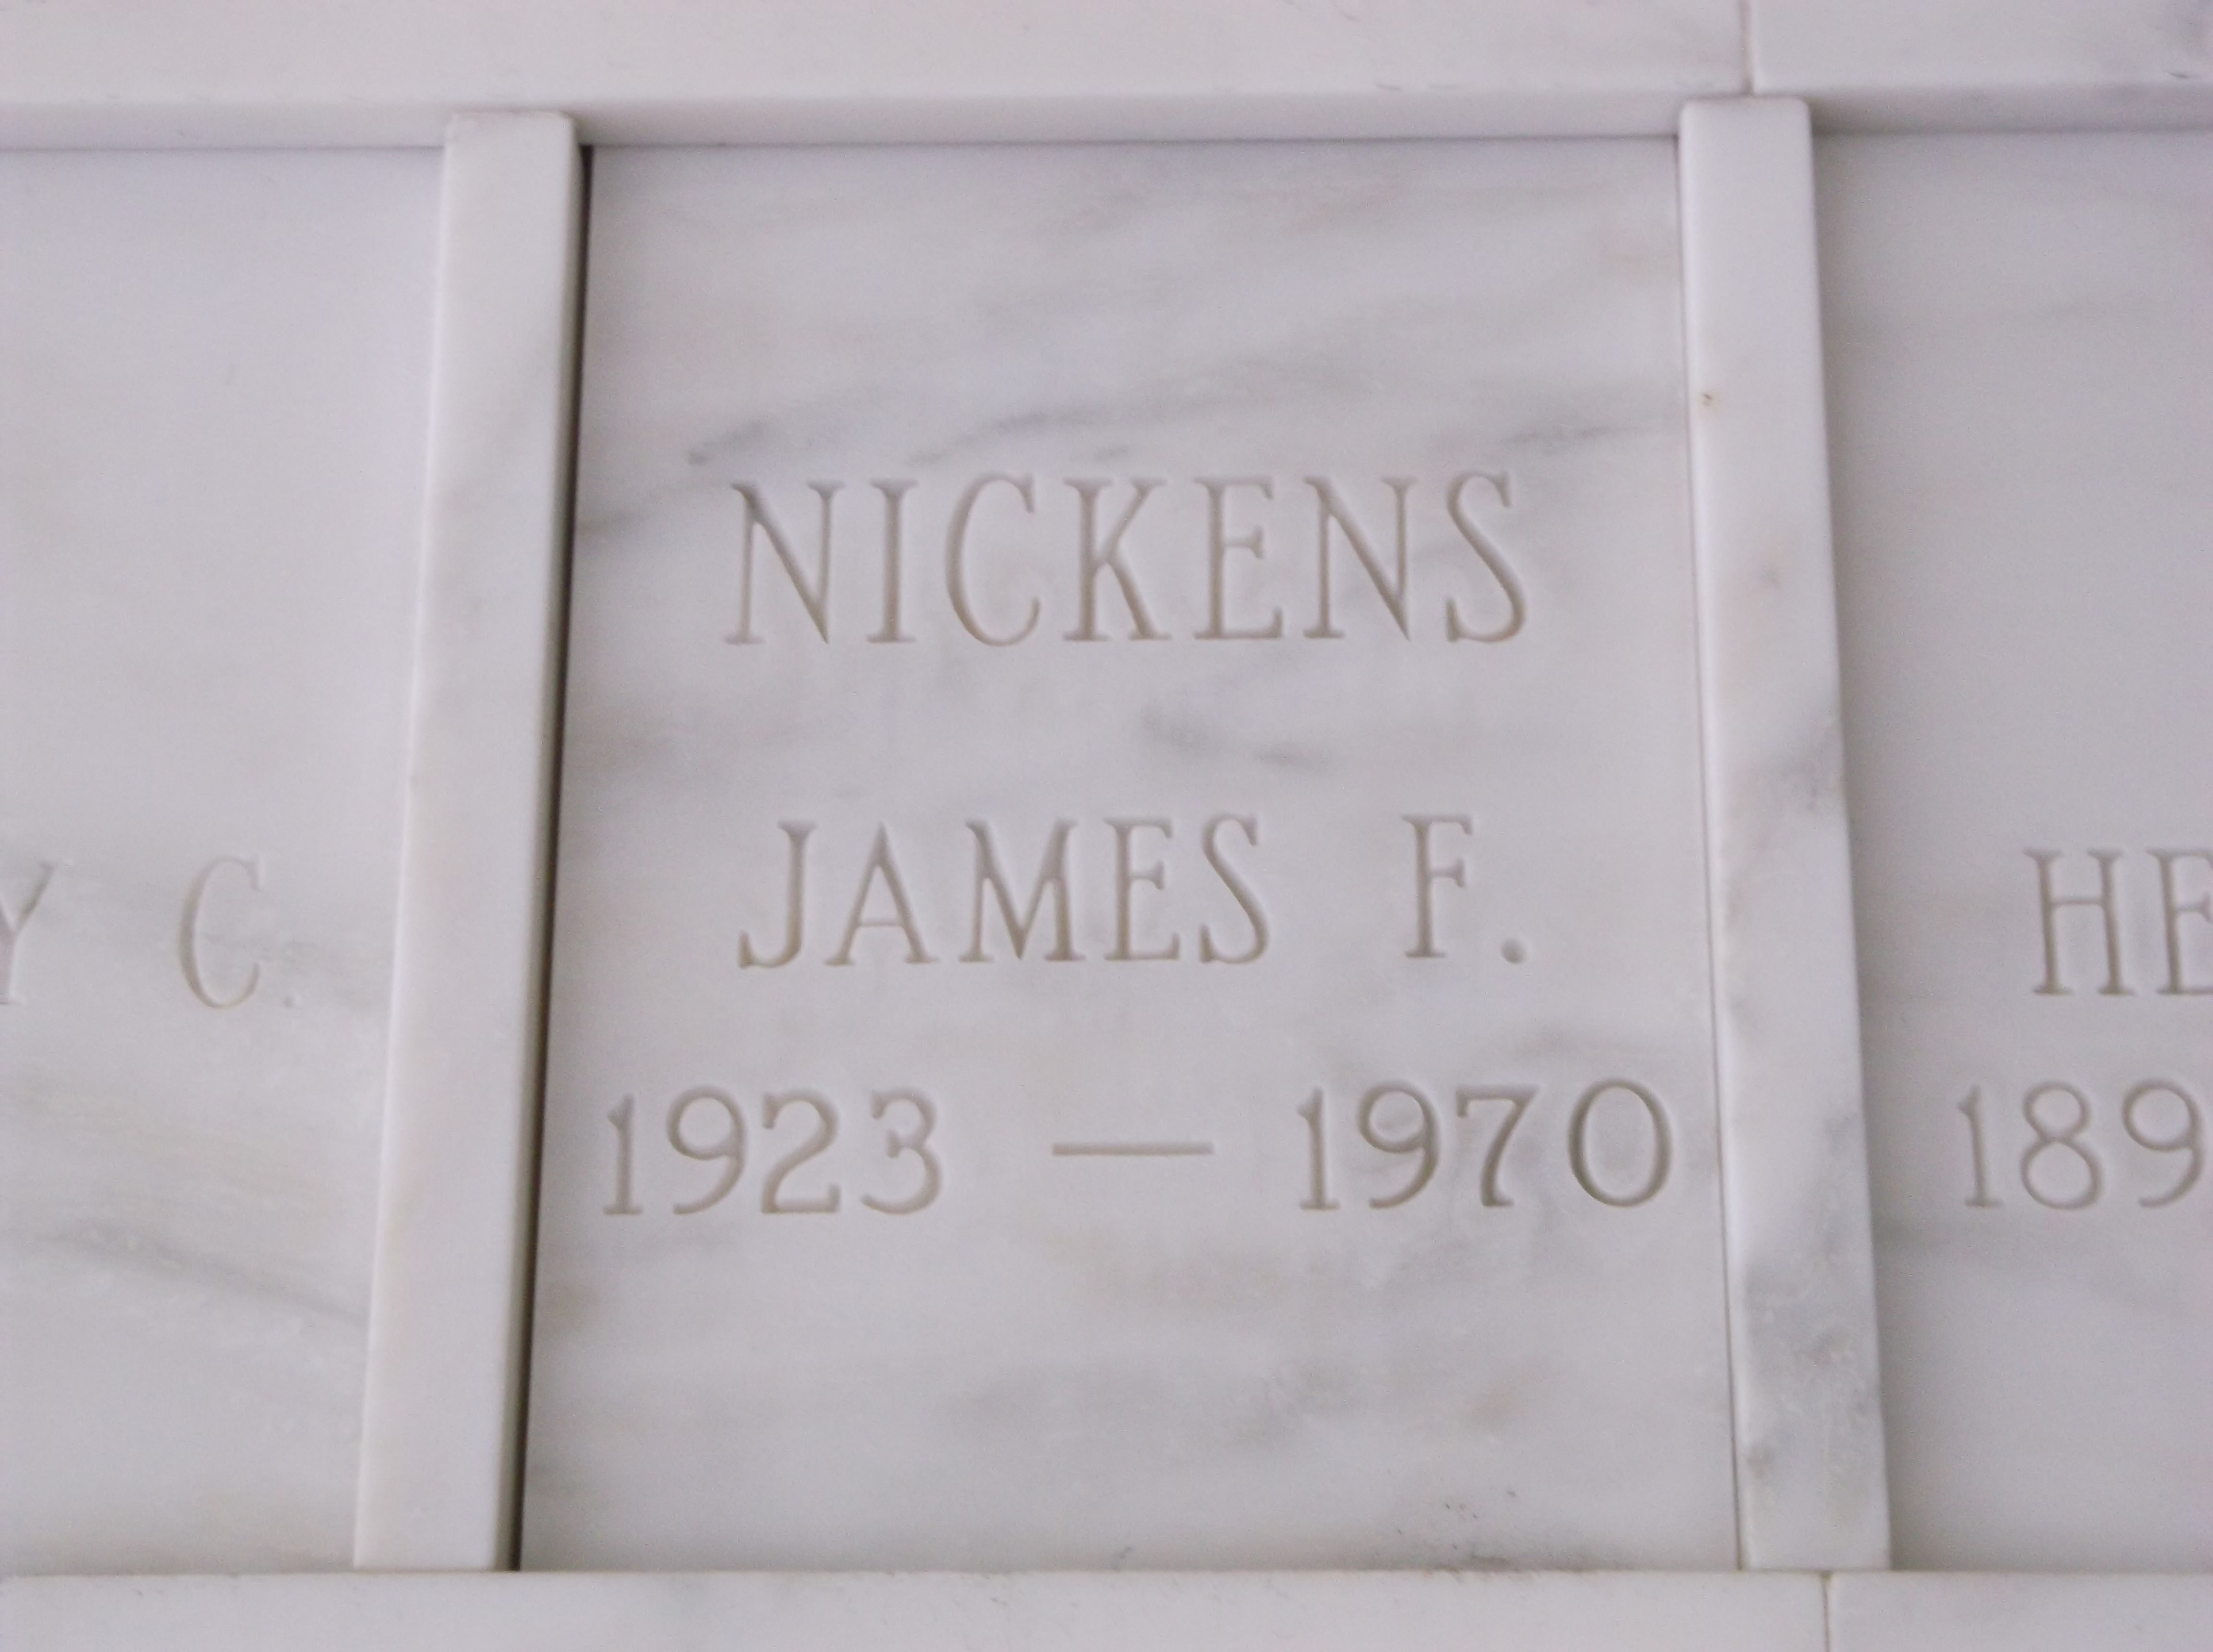 James F Nickens